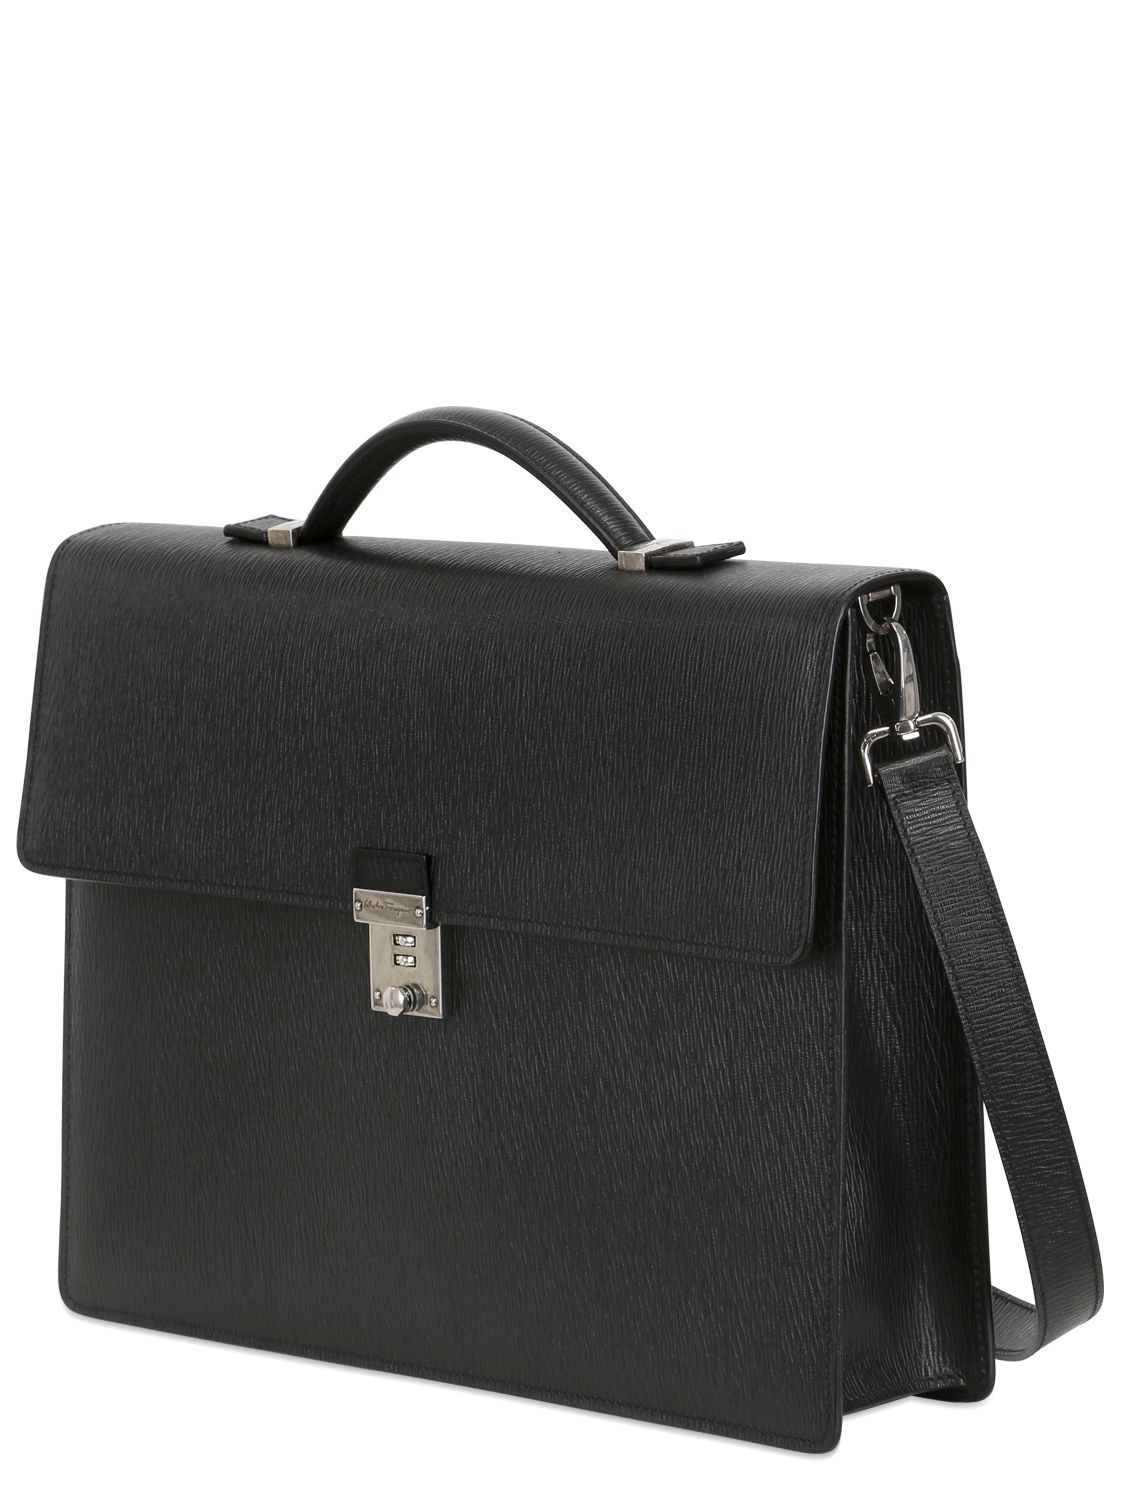 Lyst - Ferragamo Revival Leather Briefcase in Black for Men